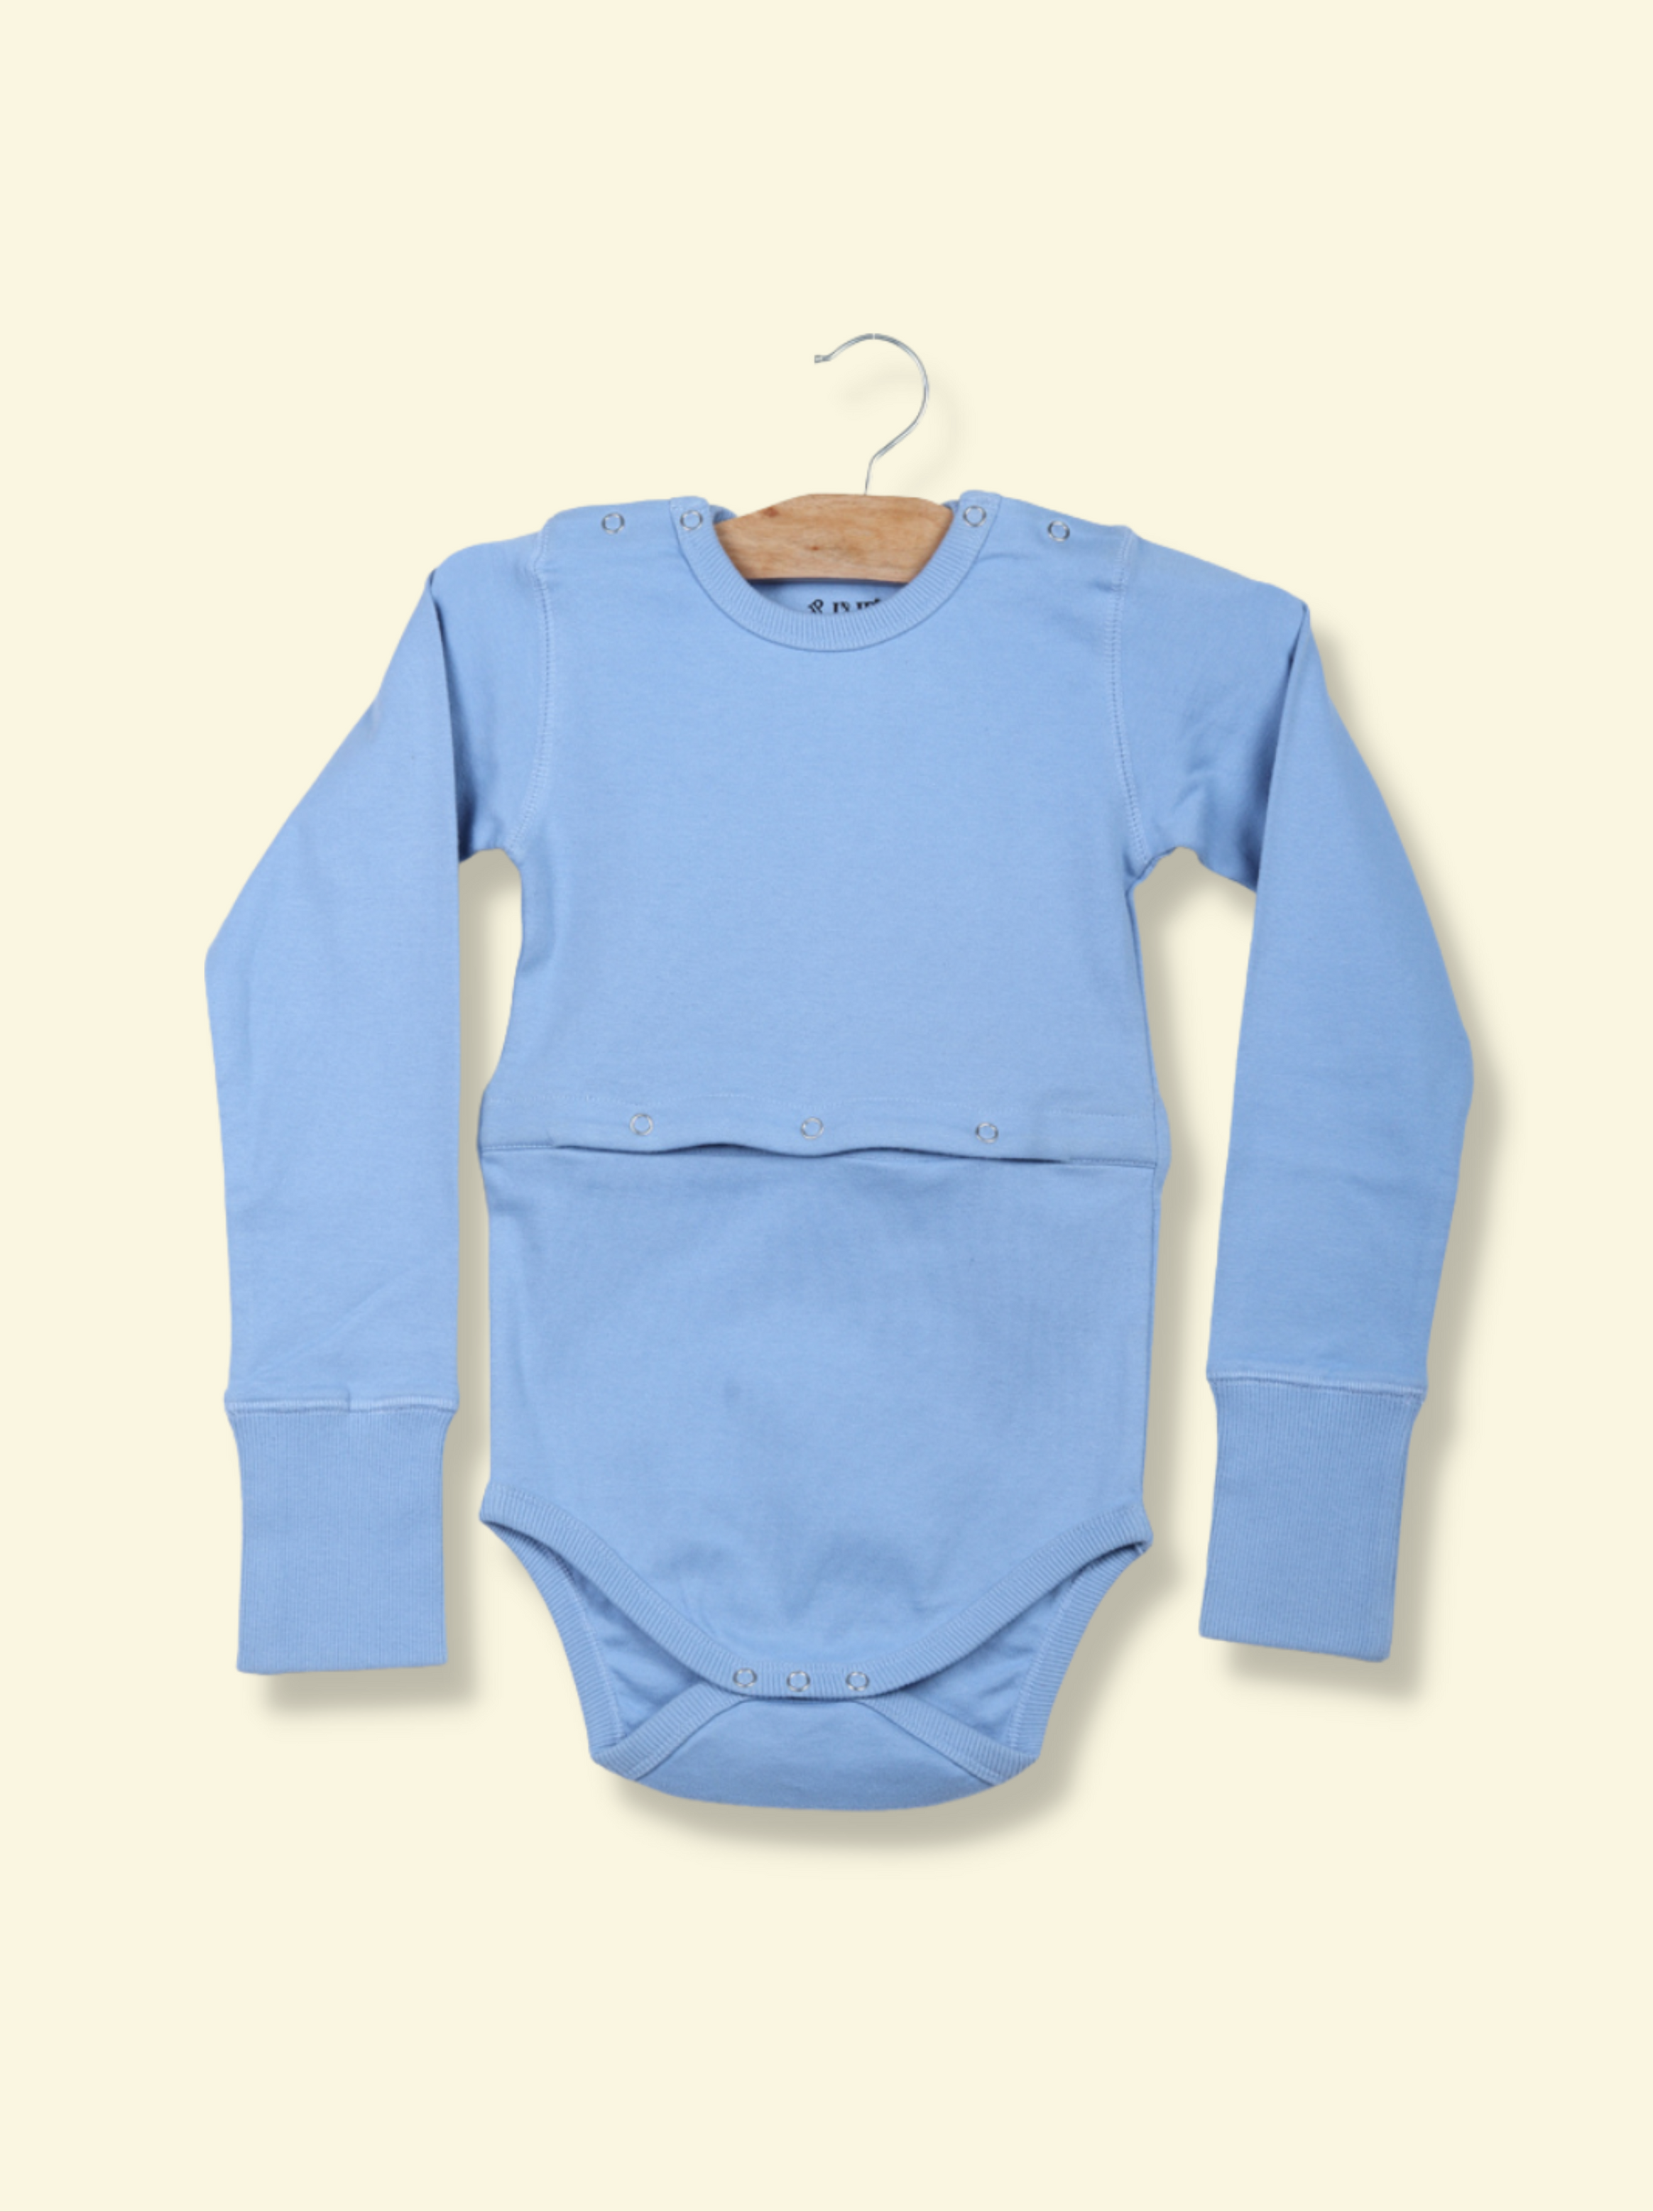 Kids Blue Full sleeve Printed Cotton jersey knit, Single Jersey T-Shirt